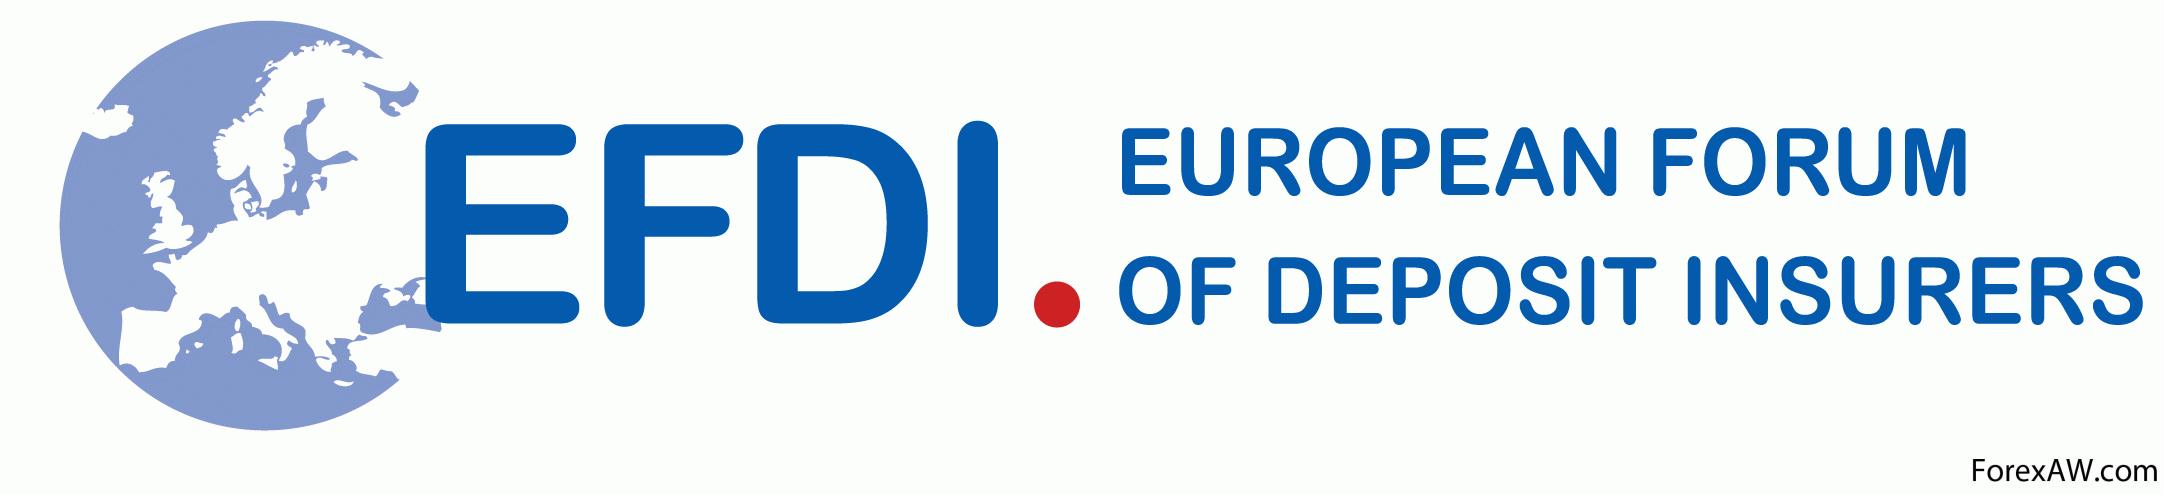 Forum eu. International Association of deposit insurers. Deposit logo. Insurers Association. Deposit with County Association China.